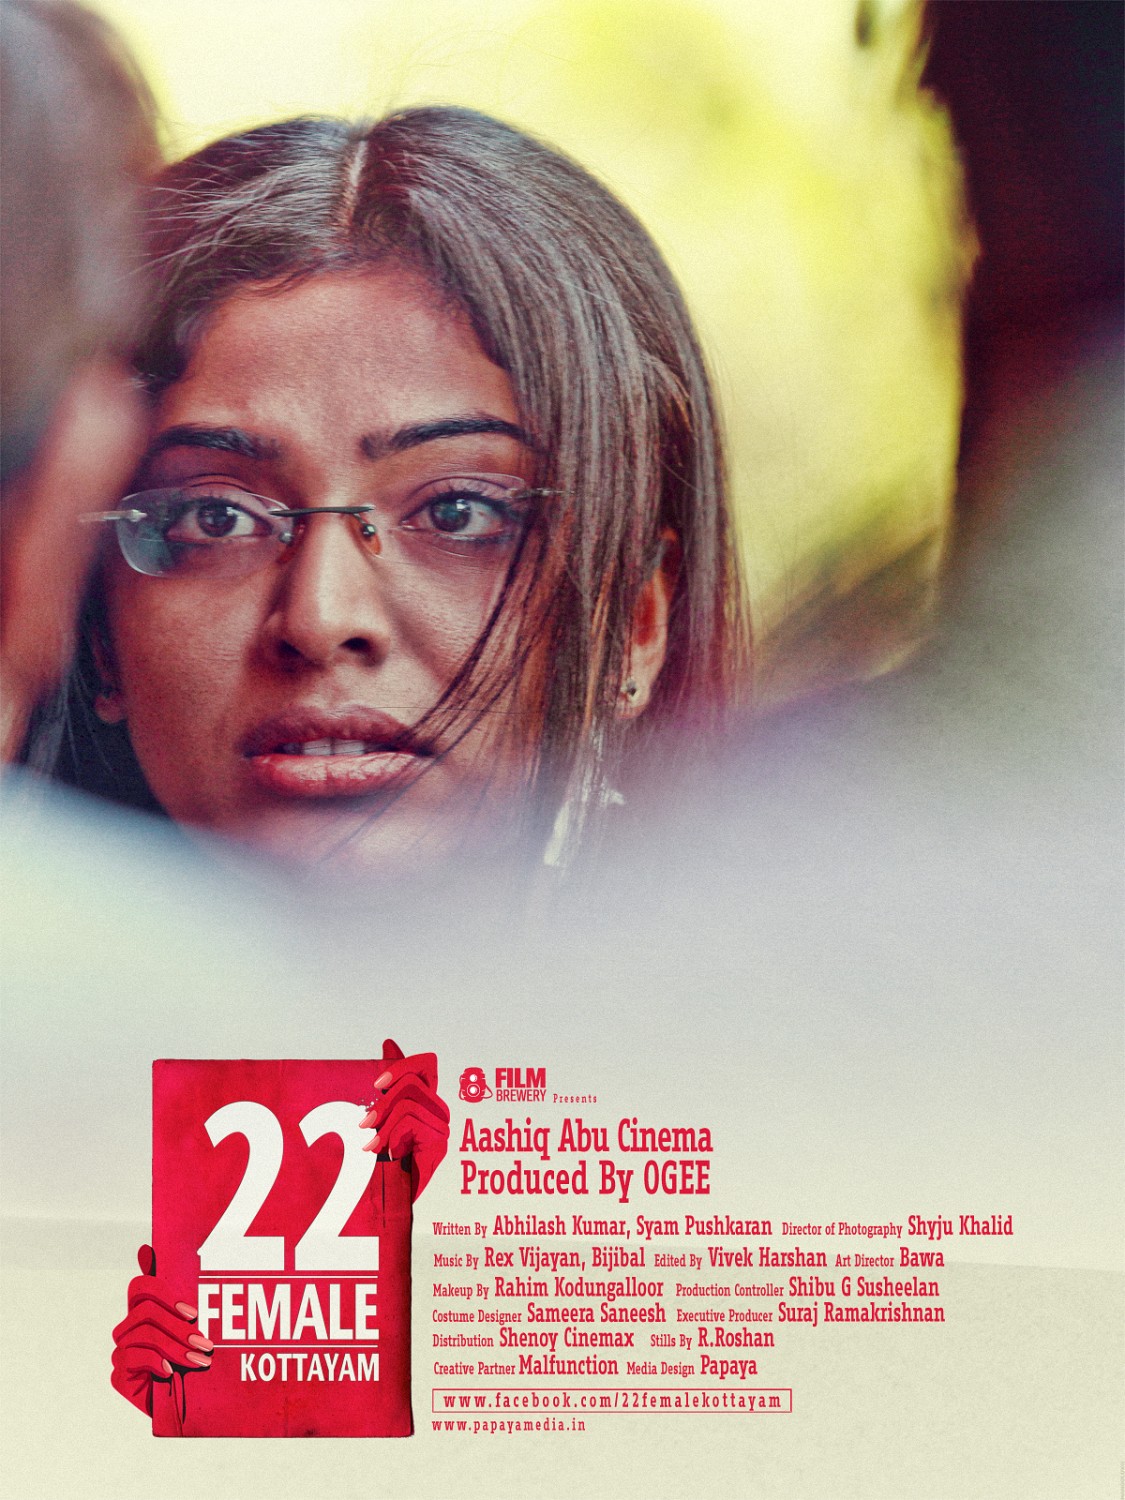 Extra Large Movie Poster Image for 22 Female Kottayam (#12 of 28)